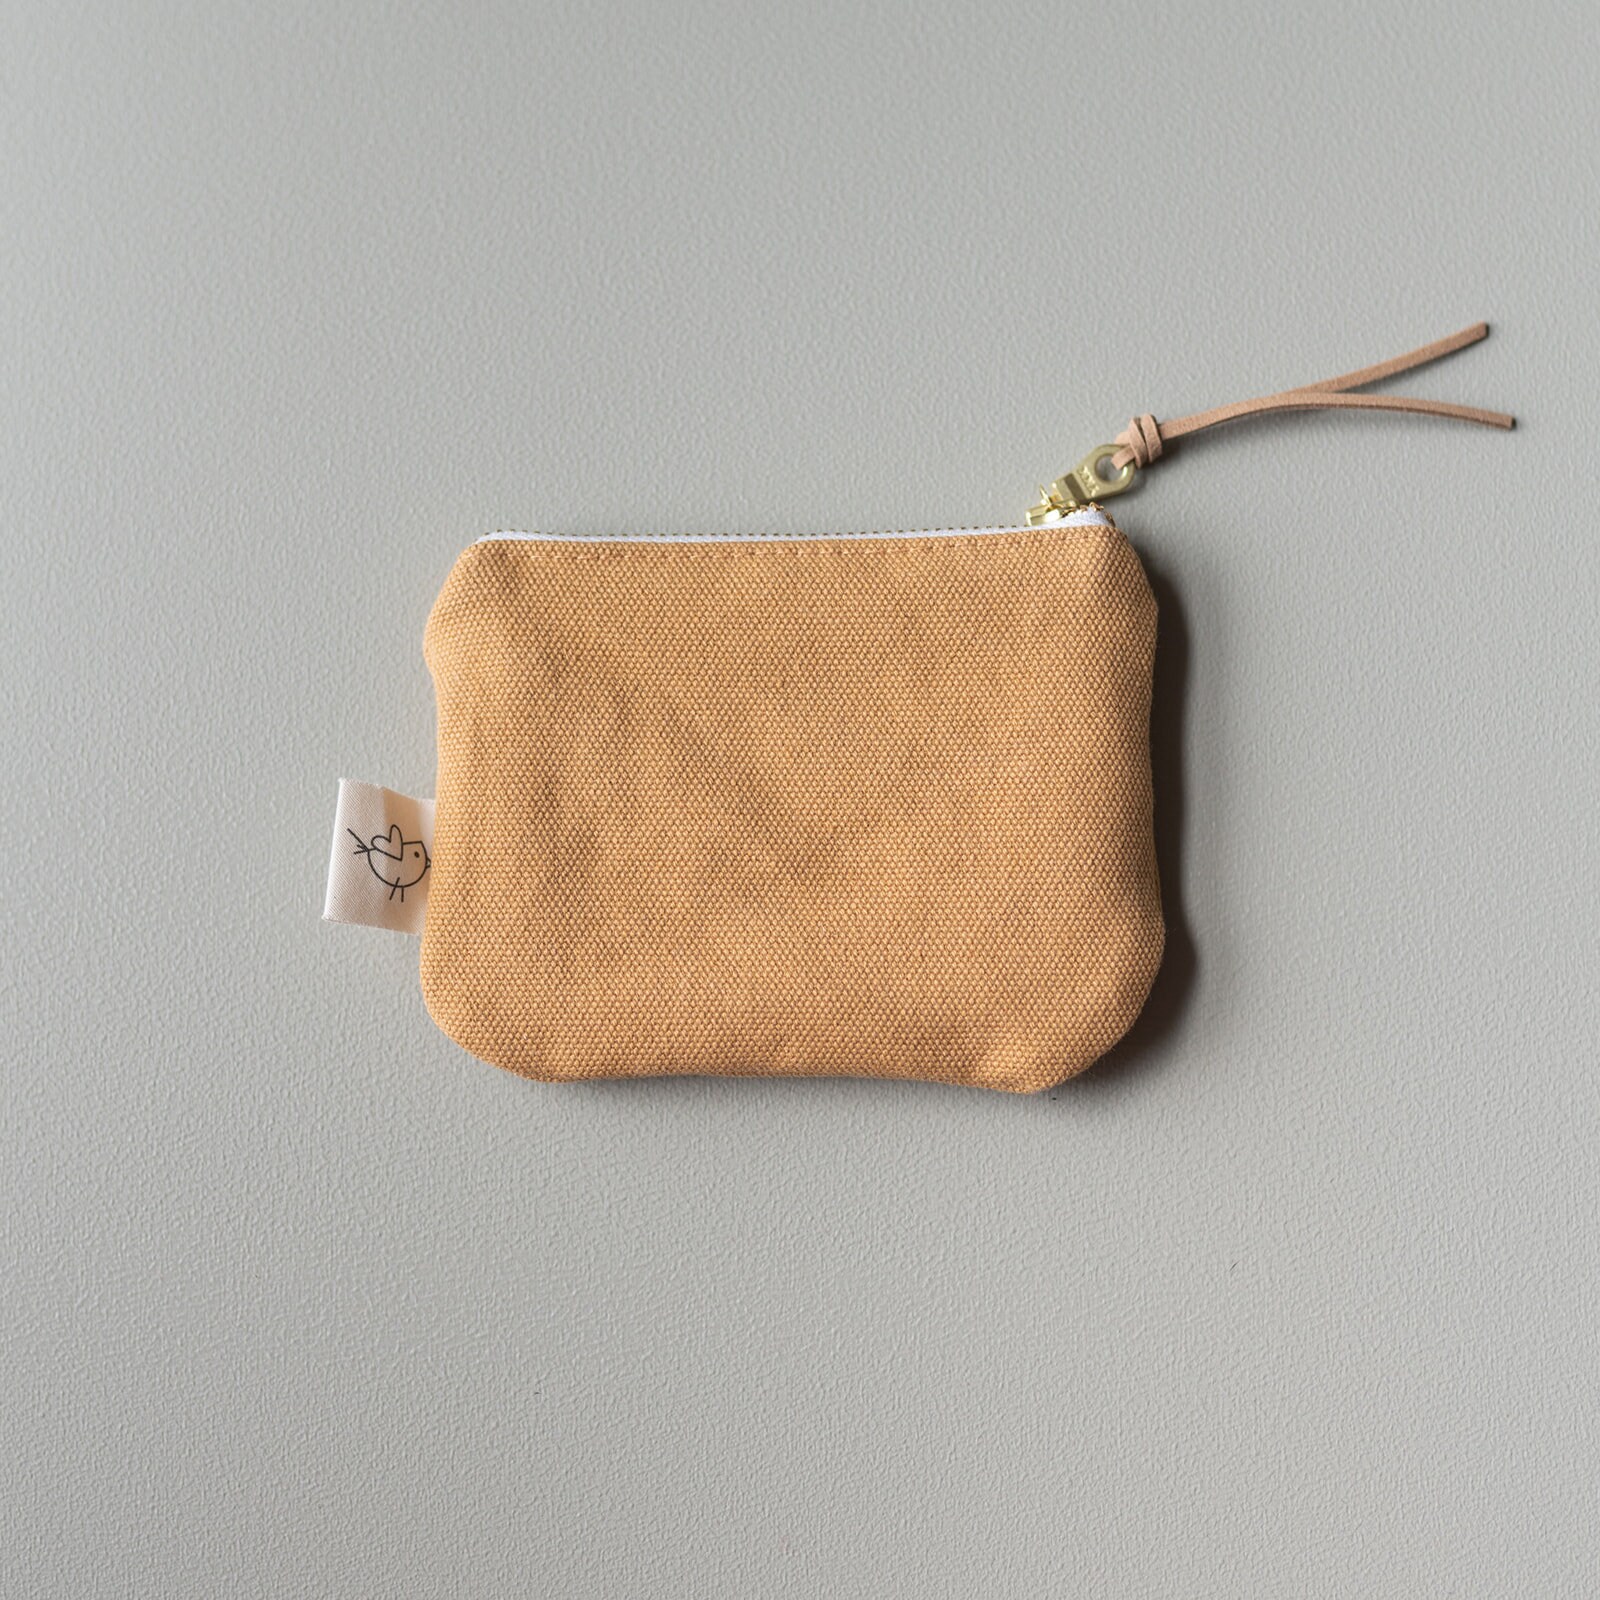 Canvas cloth art creative zero purse small coin purse hand bag mouth gold  material bag key